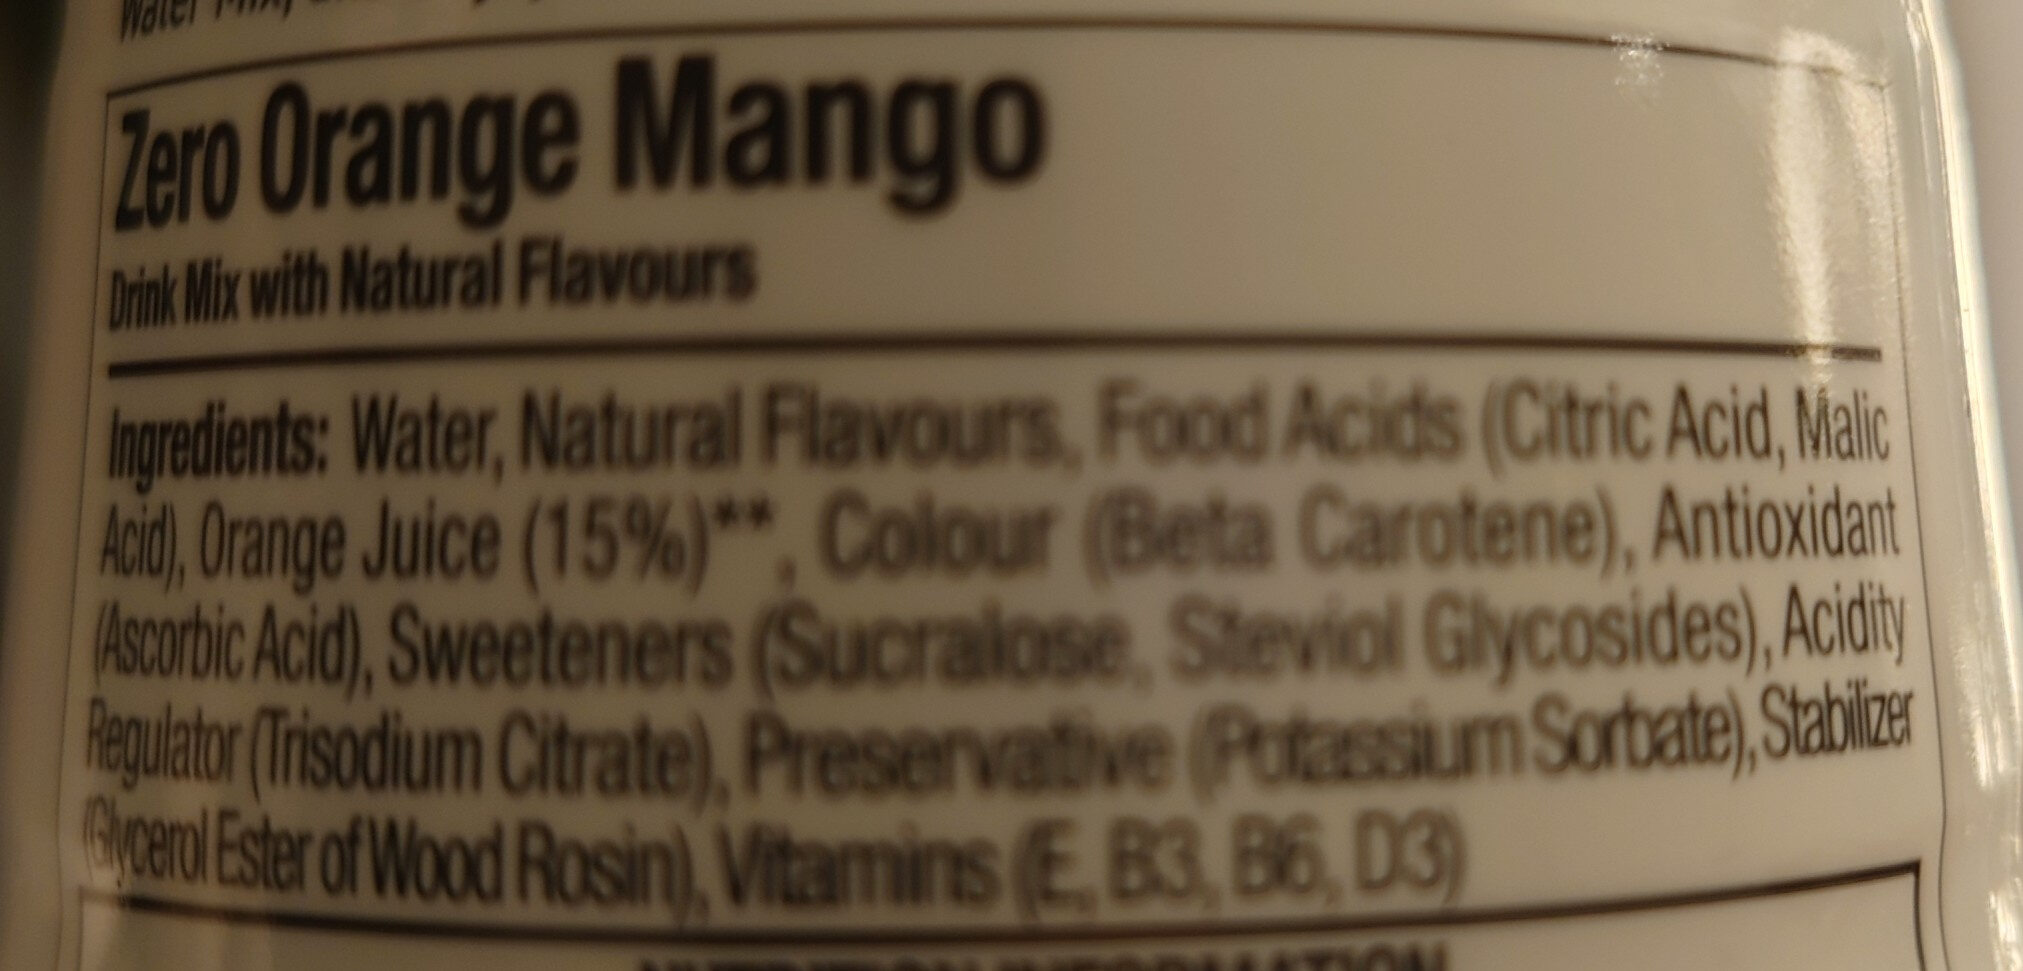 sodastream Waters Zeros Orange Mango - Ingredients - fr